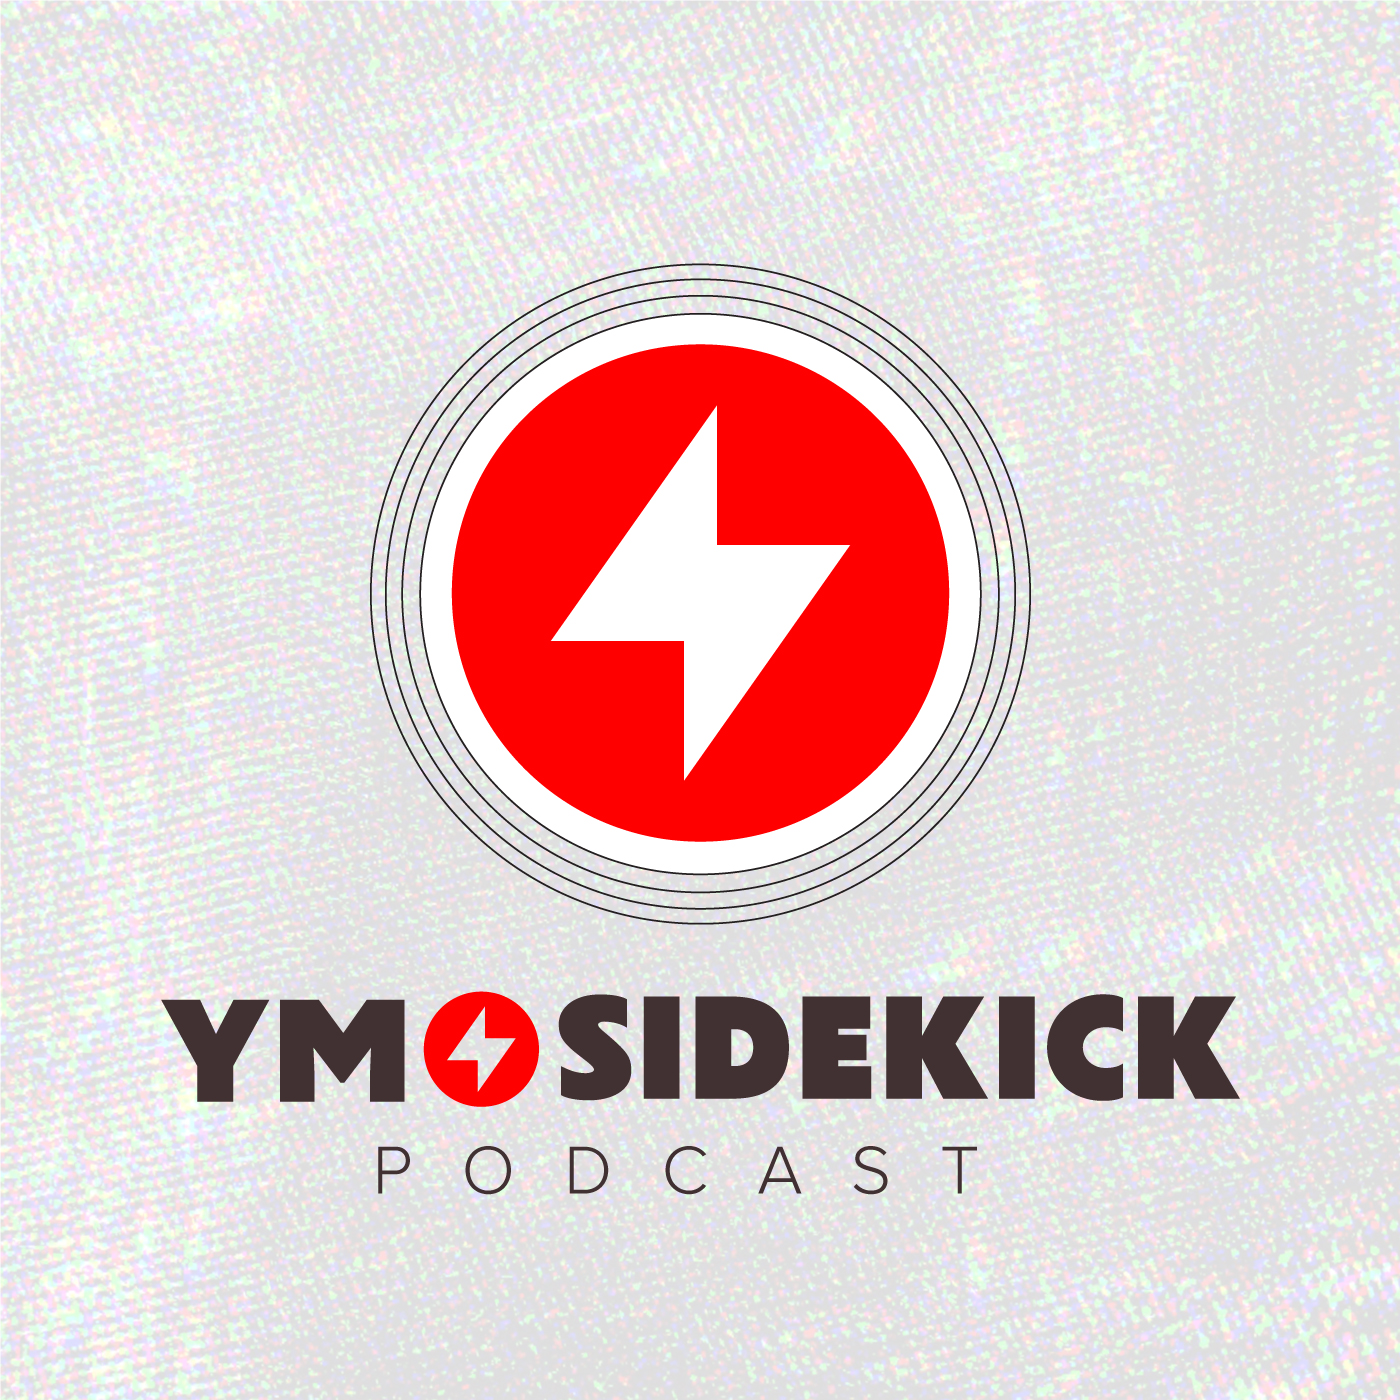 The YM Sidekick Podcast